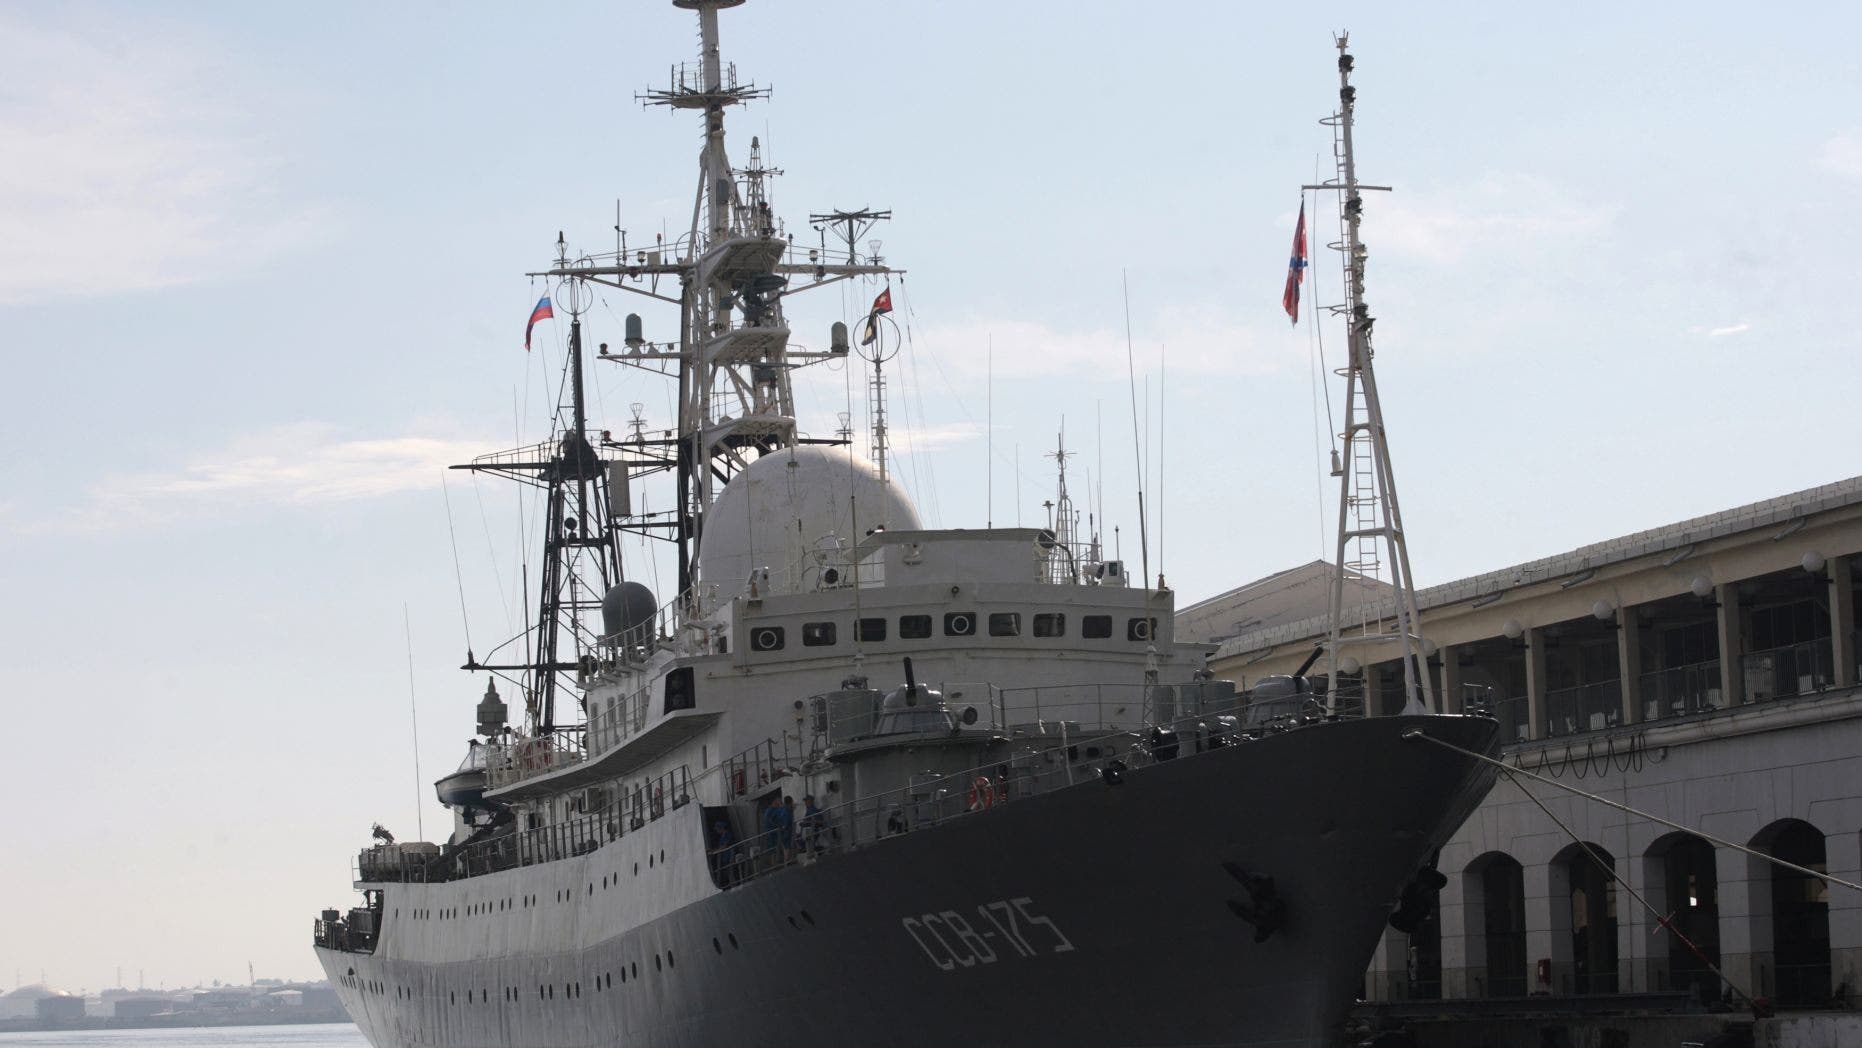 Russian spy ship spotted off East Coast near US submarine fleet, Coast